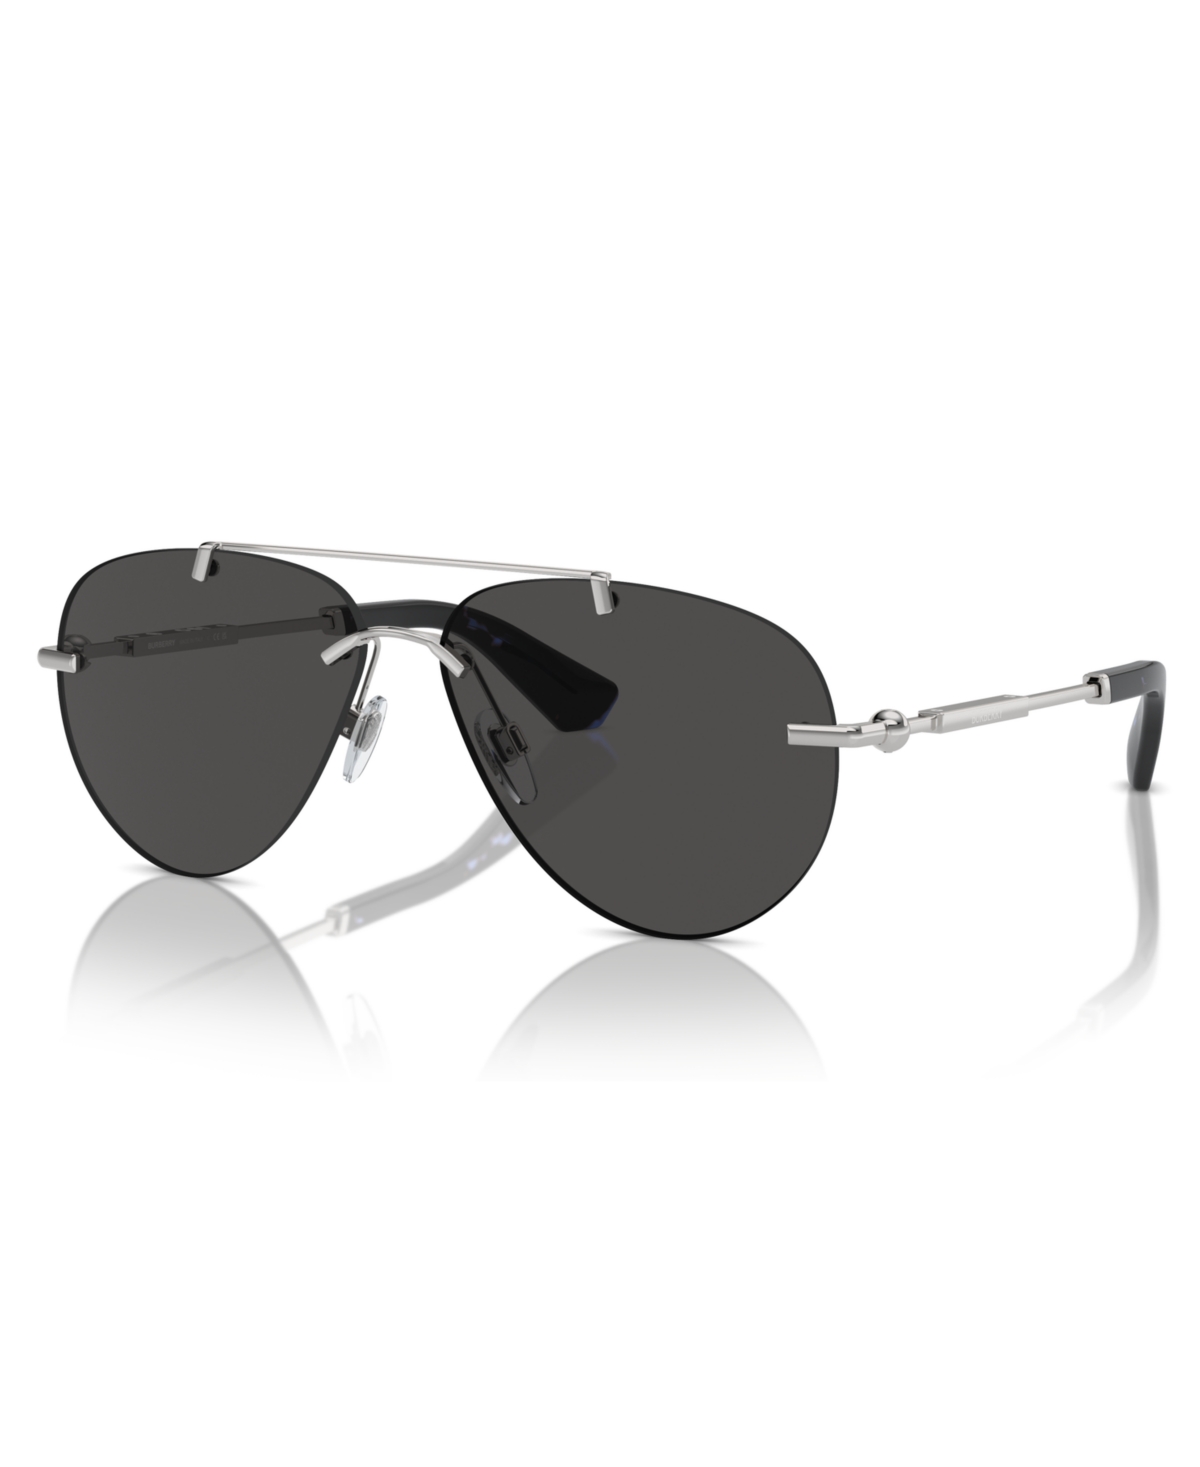 Women's Sunglasses, Be3151 - Silver